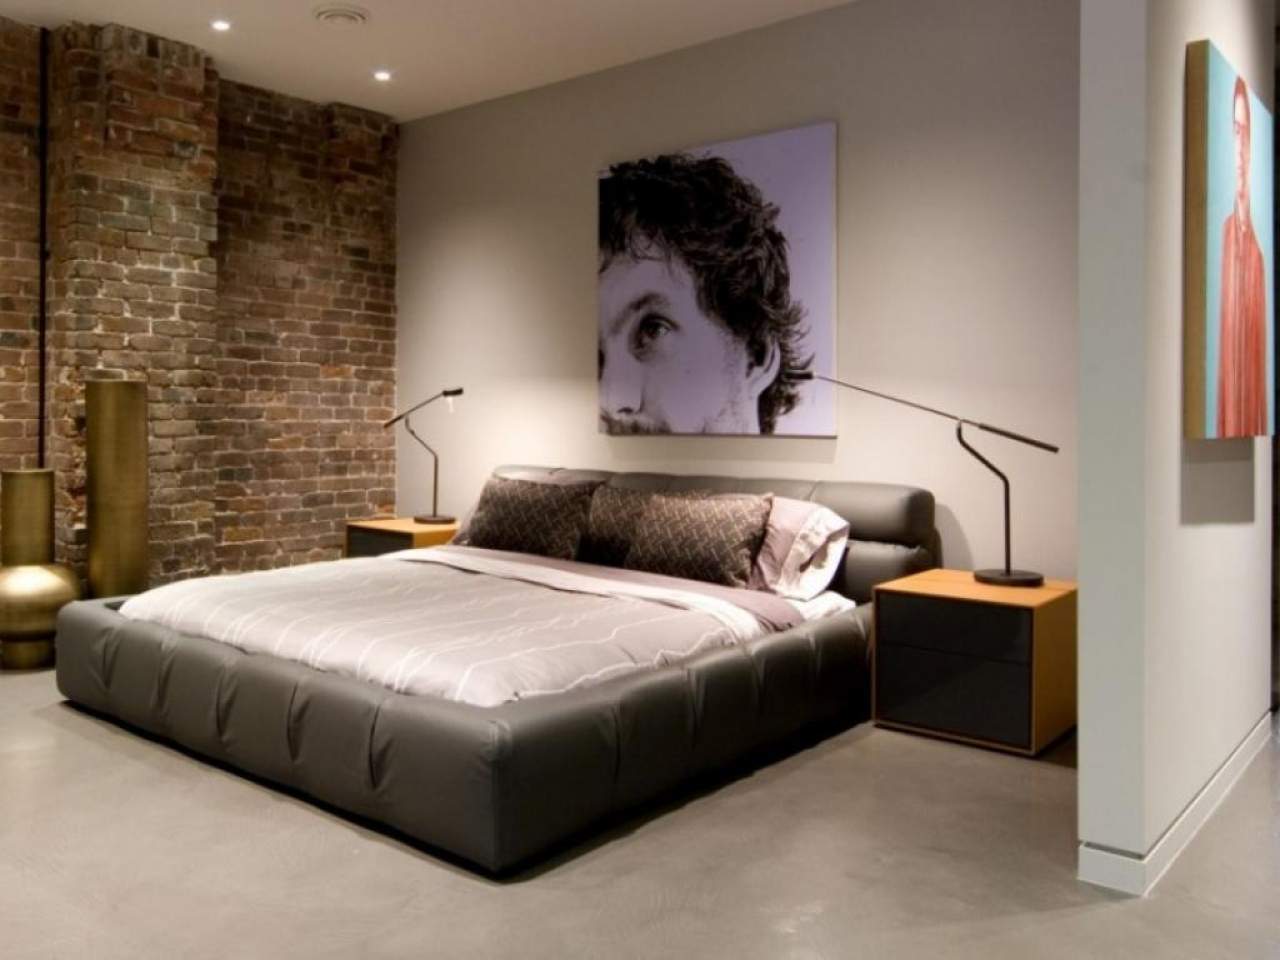 17 Cool bedroom designs for men - Interior Design Inspirations